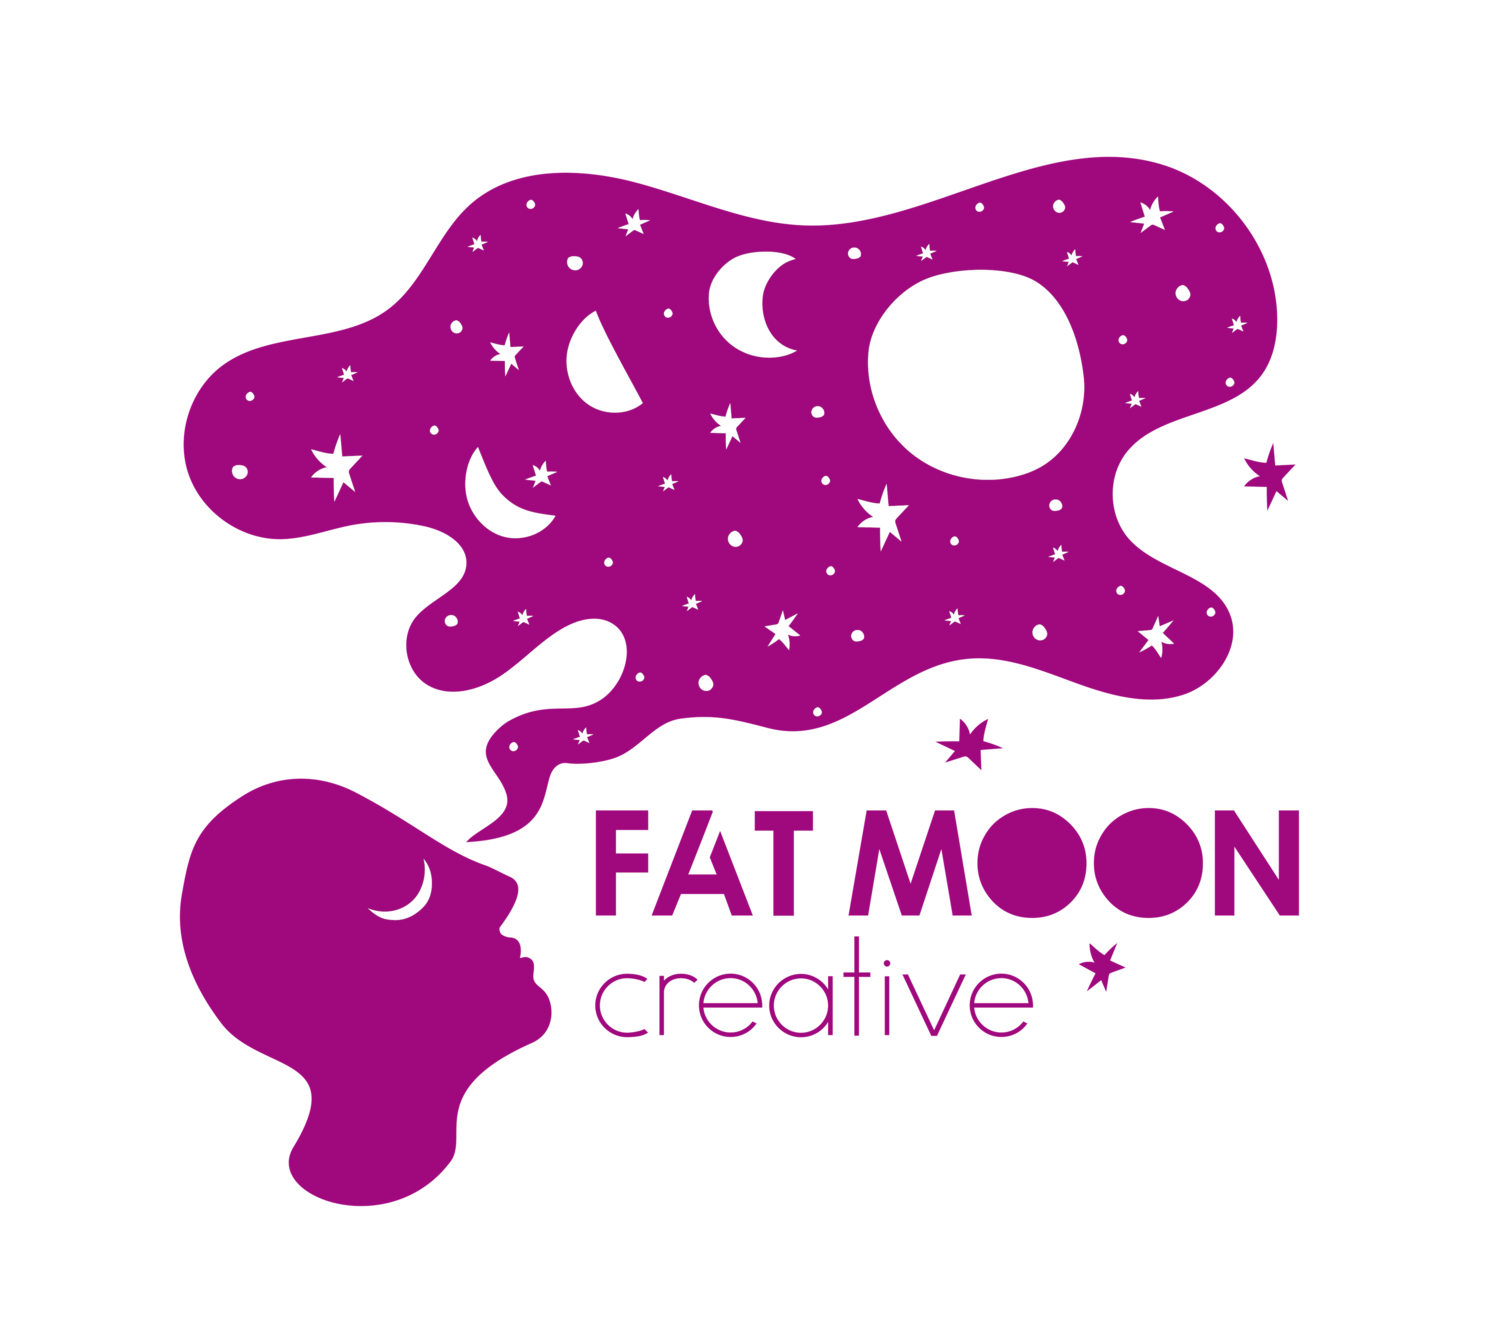 Fat Moon Creative